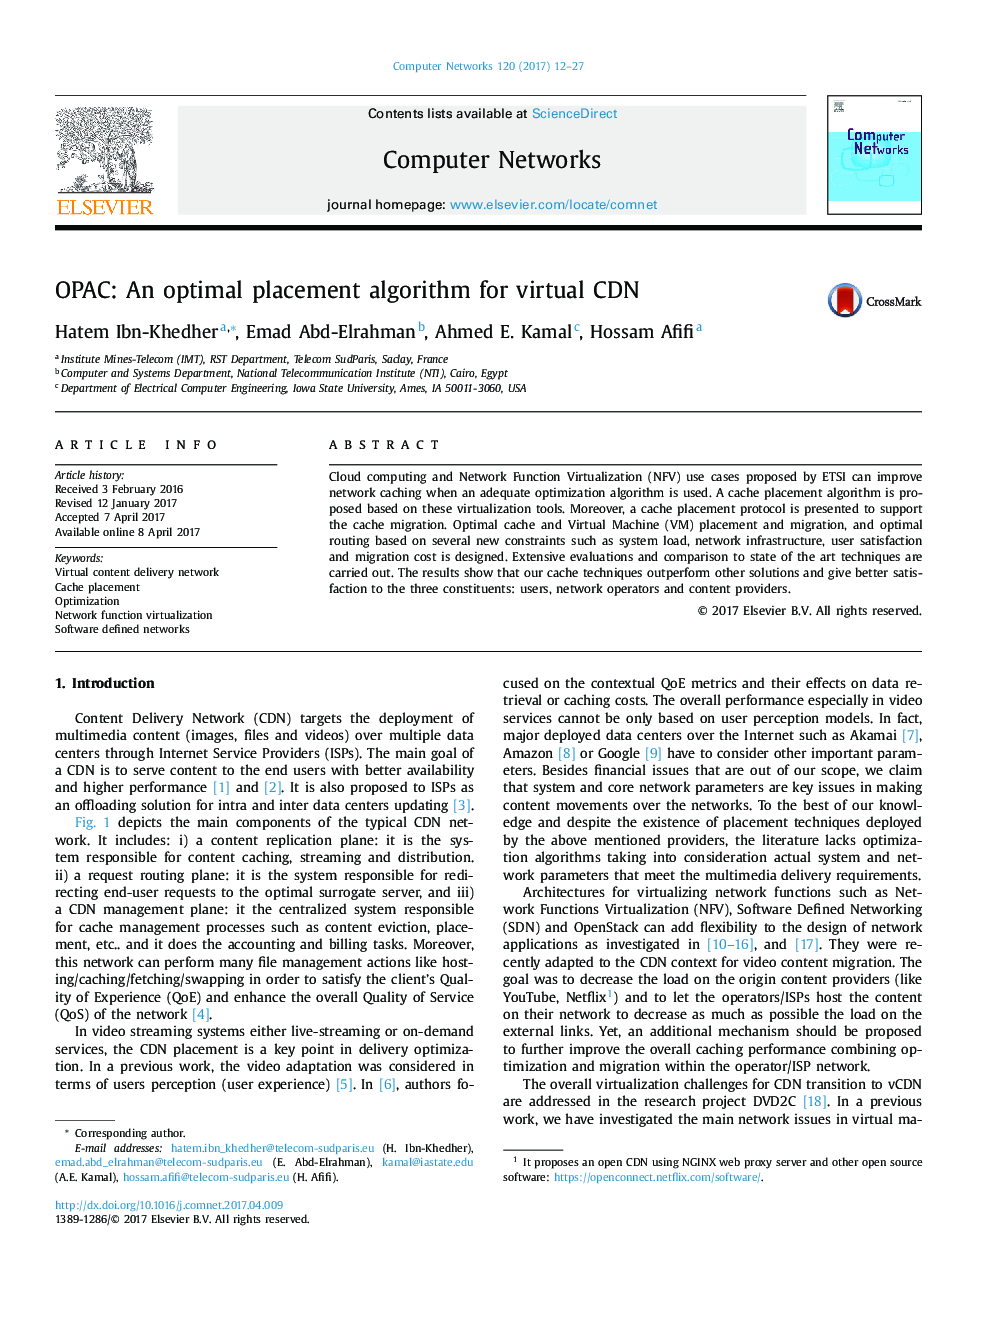 OPAC: An optimal placement algorithm for virtual CDN